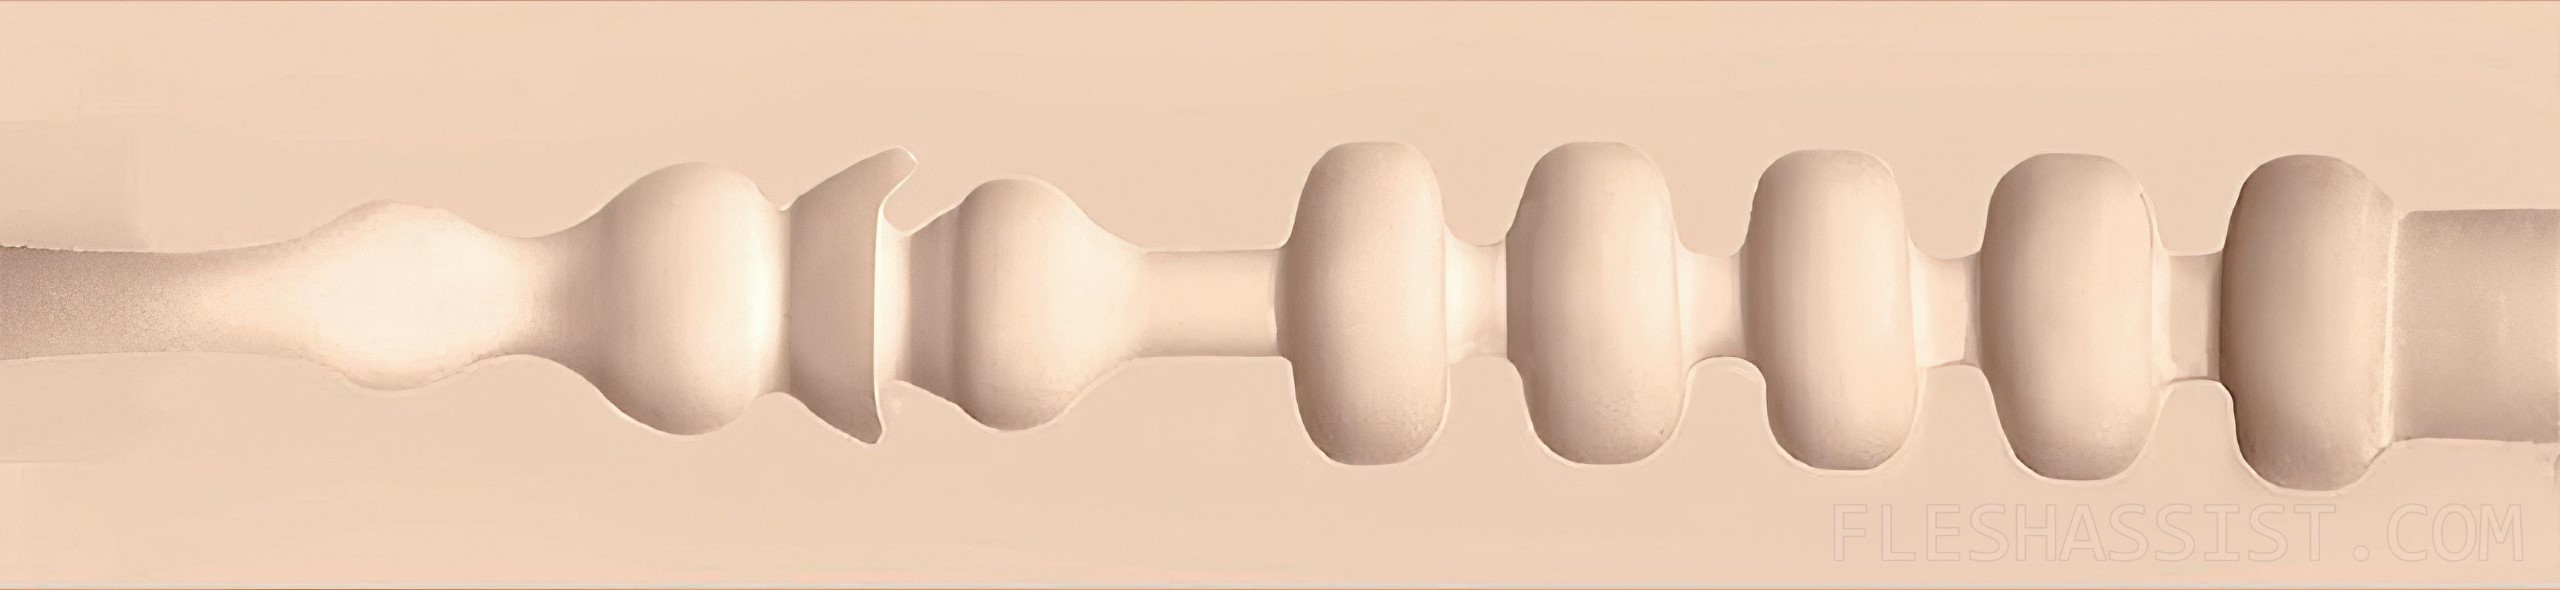 Mini-Lotus Fleshlight Girls Texture Image